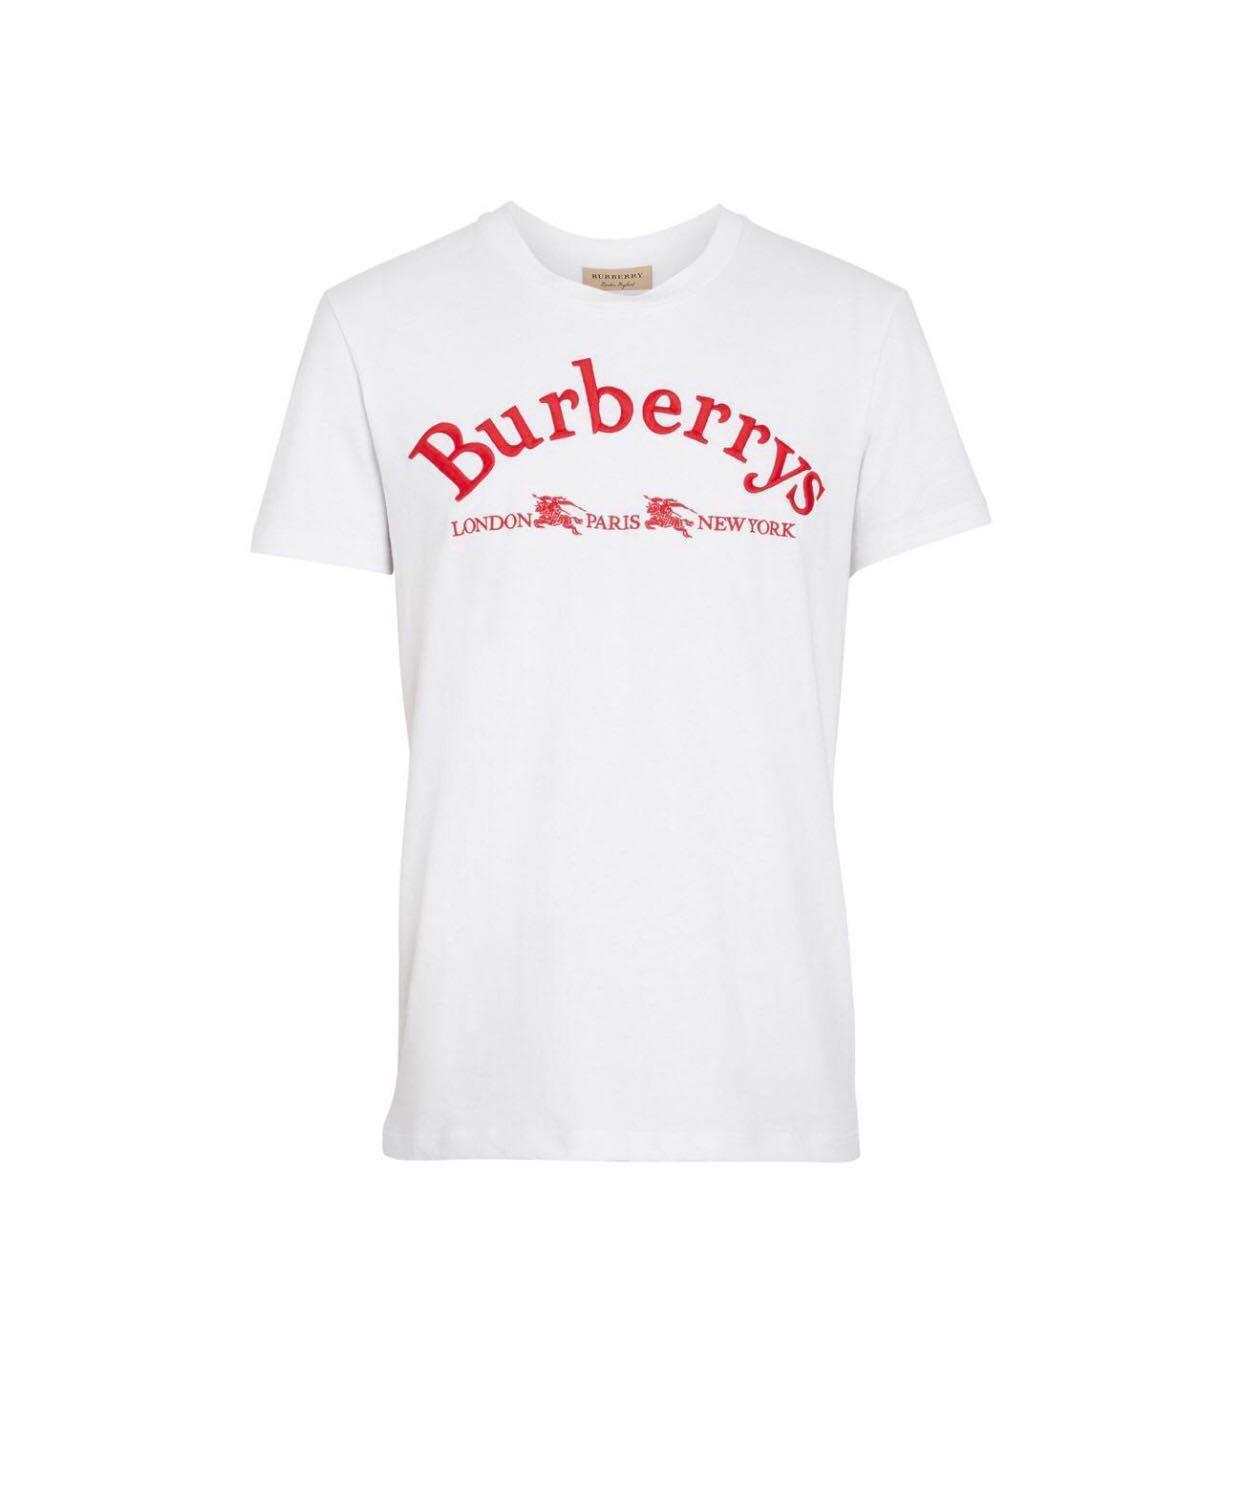 red burberry t shirt mens